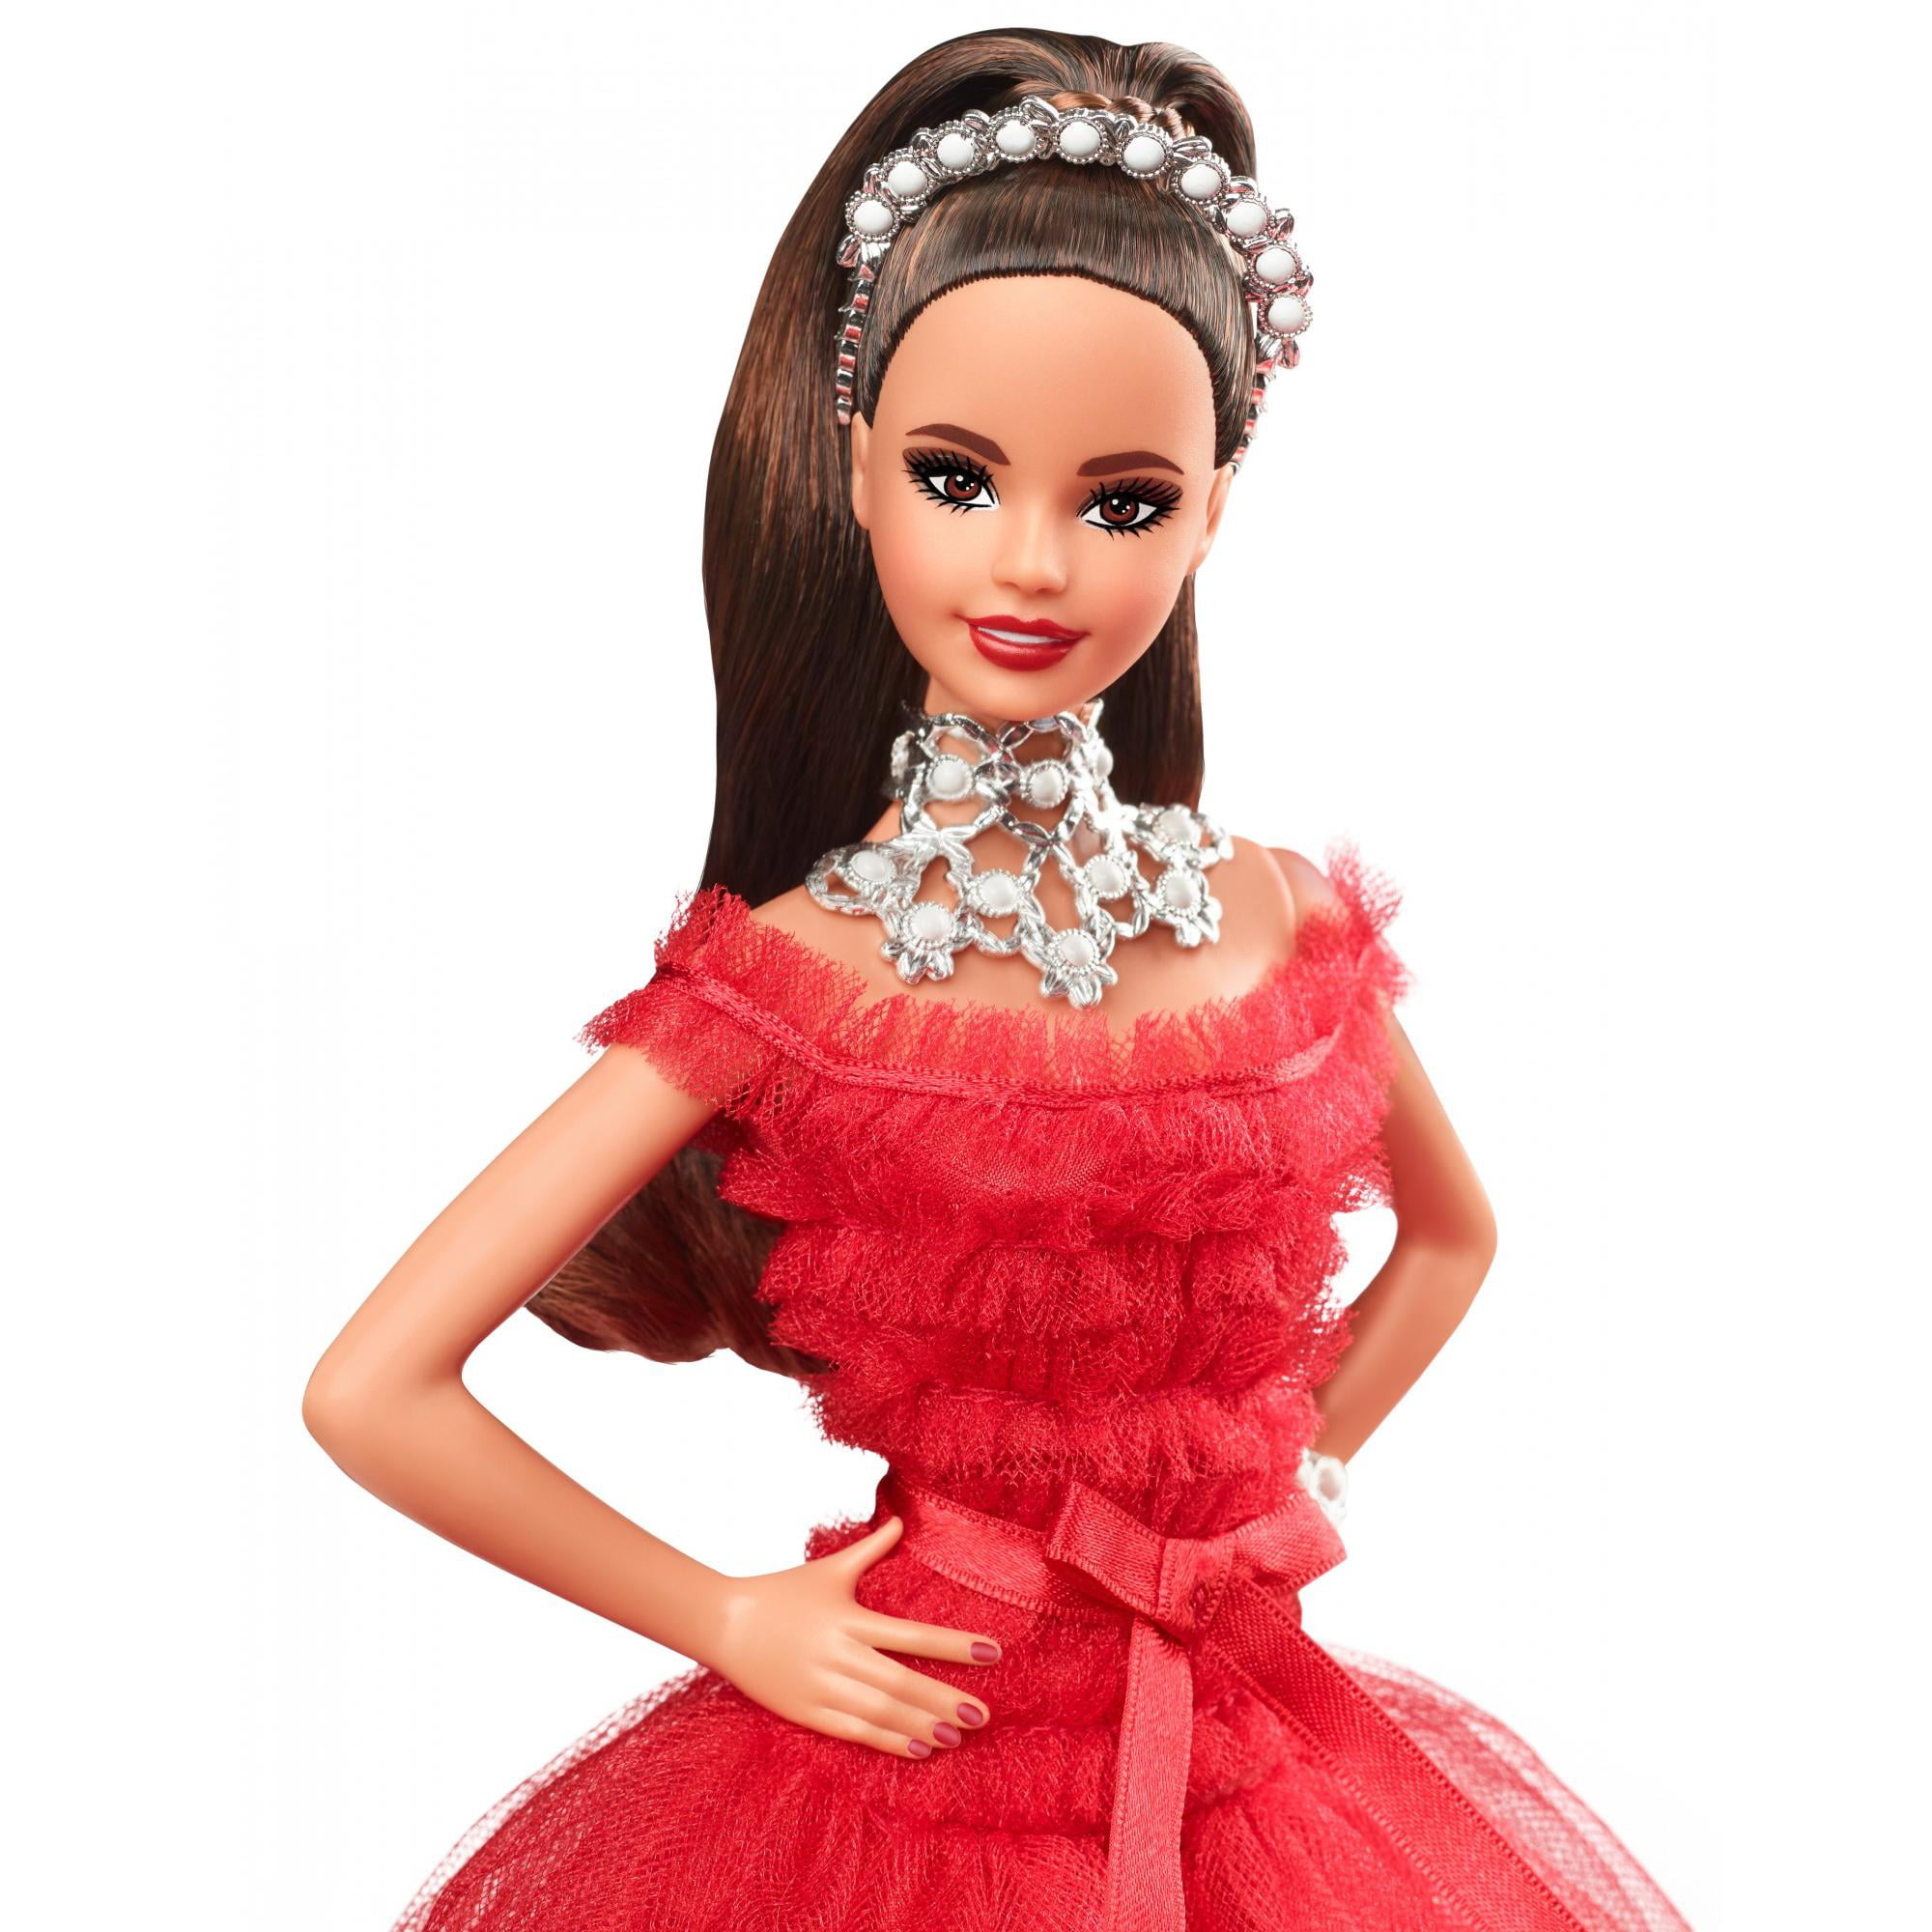 Concurrenten stromen Raffinaderij 2018 Holiday Collector Barbie Signature Teresa Doll with Stand - Walmart.com